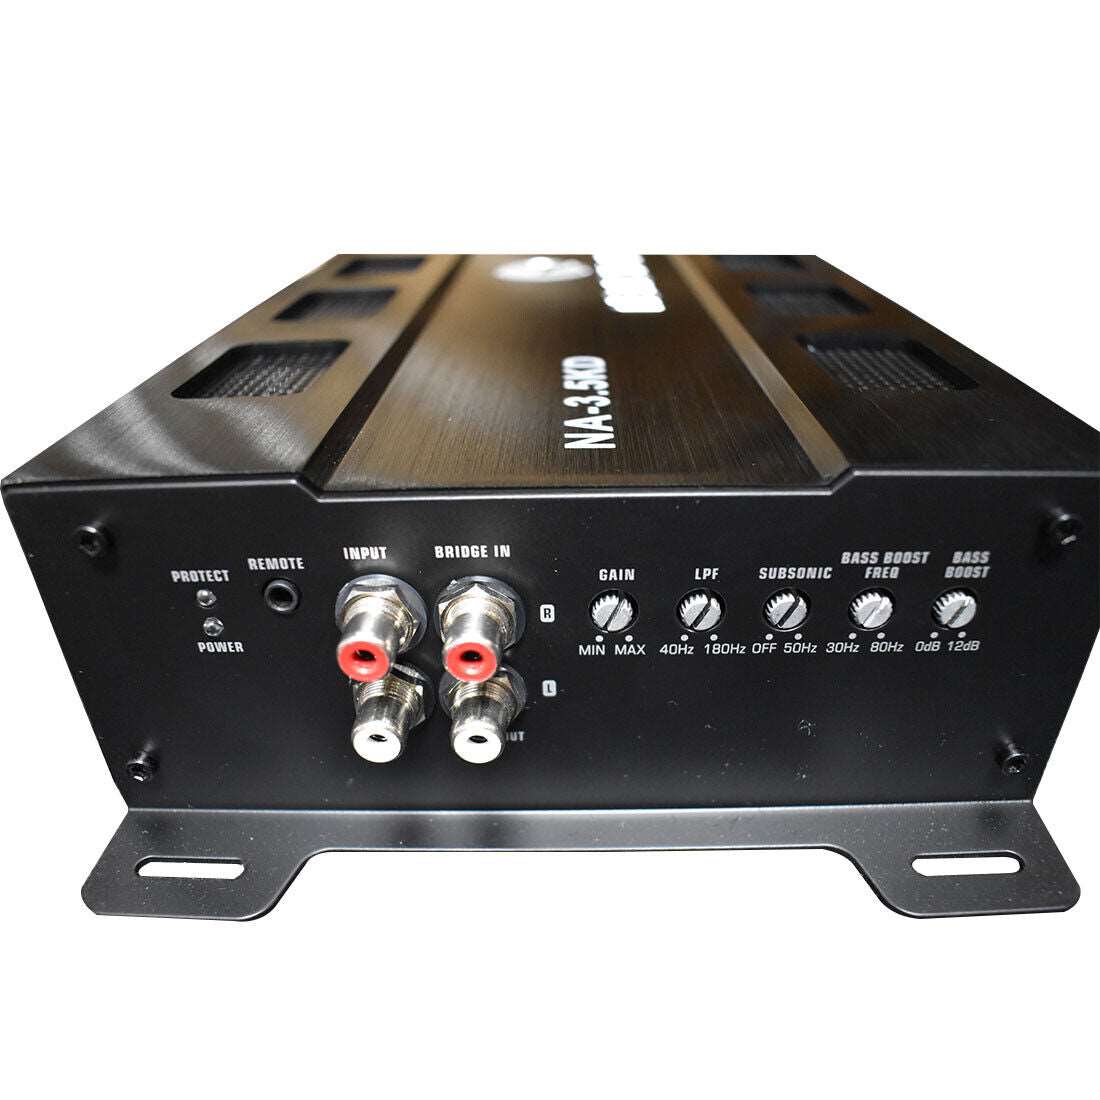 Nemesis Audio NA-3.5KD Class D Monoblock Car Amplifier 1716 Watts @ 1-Ohm